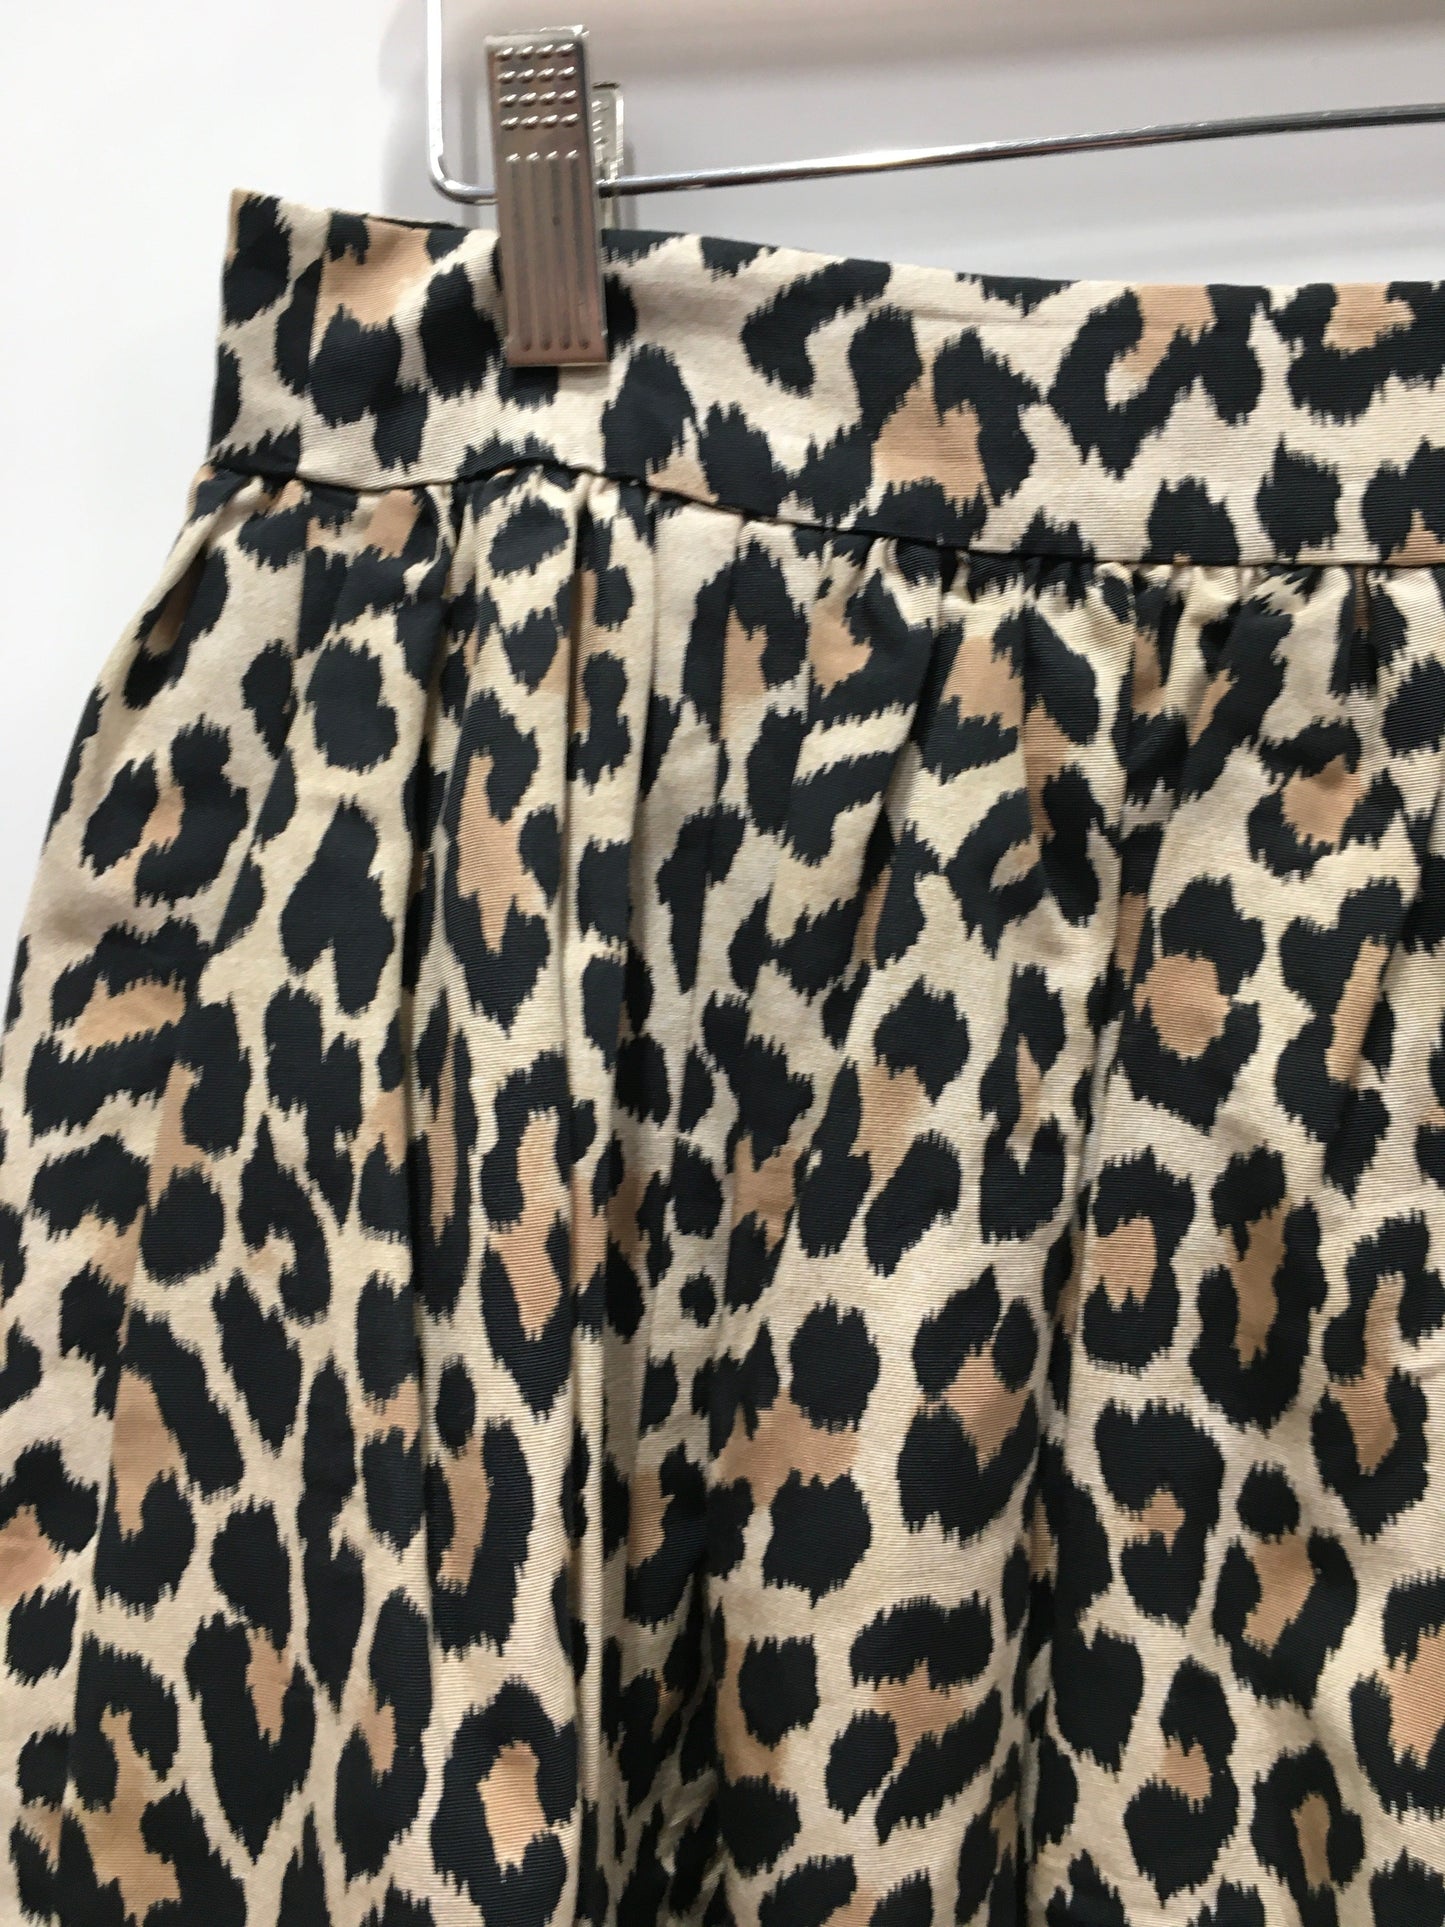 Animal Print Skirt Mini & Short Kate Spade, Size 12